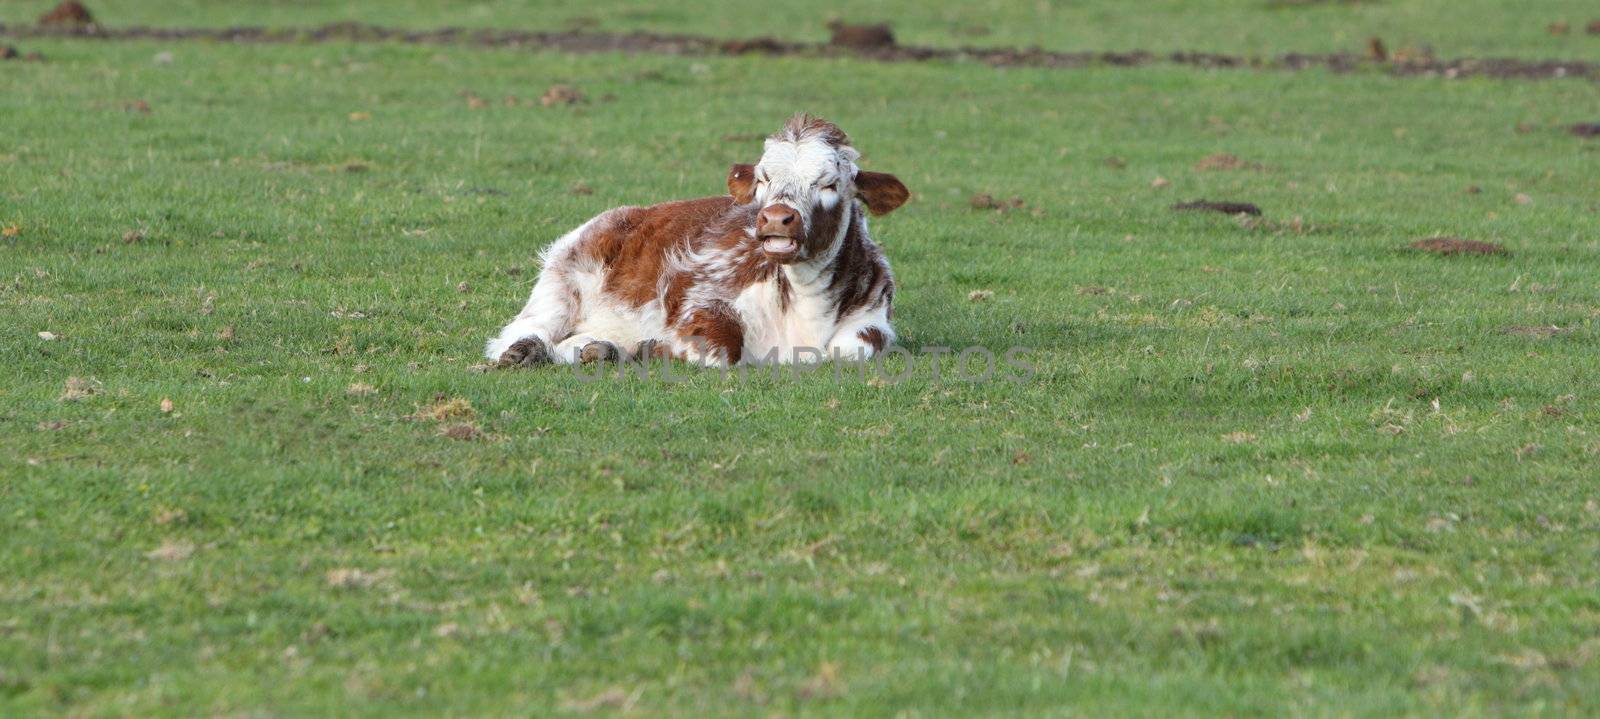 calf lying down by mitzy